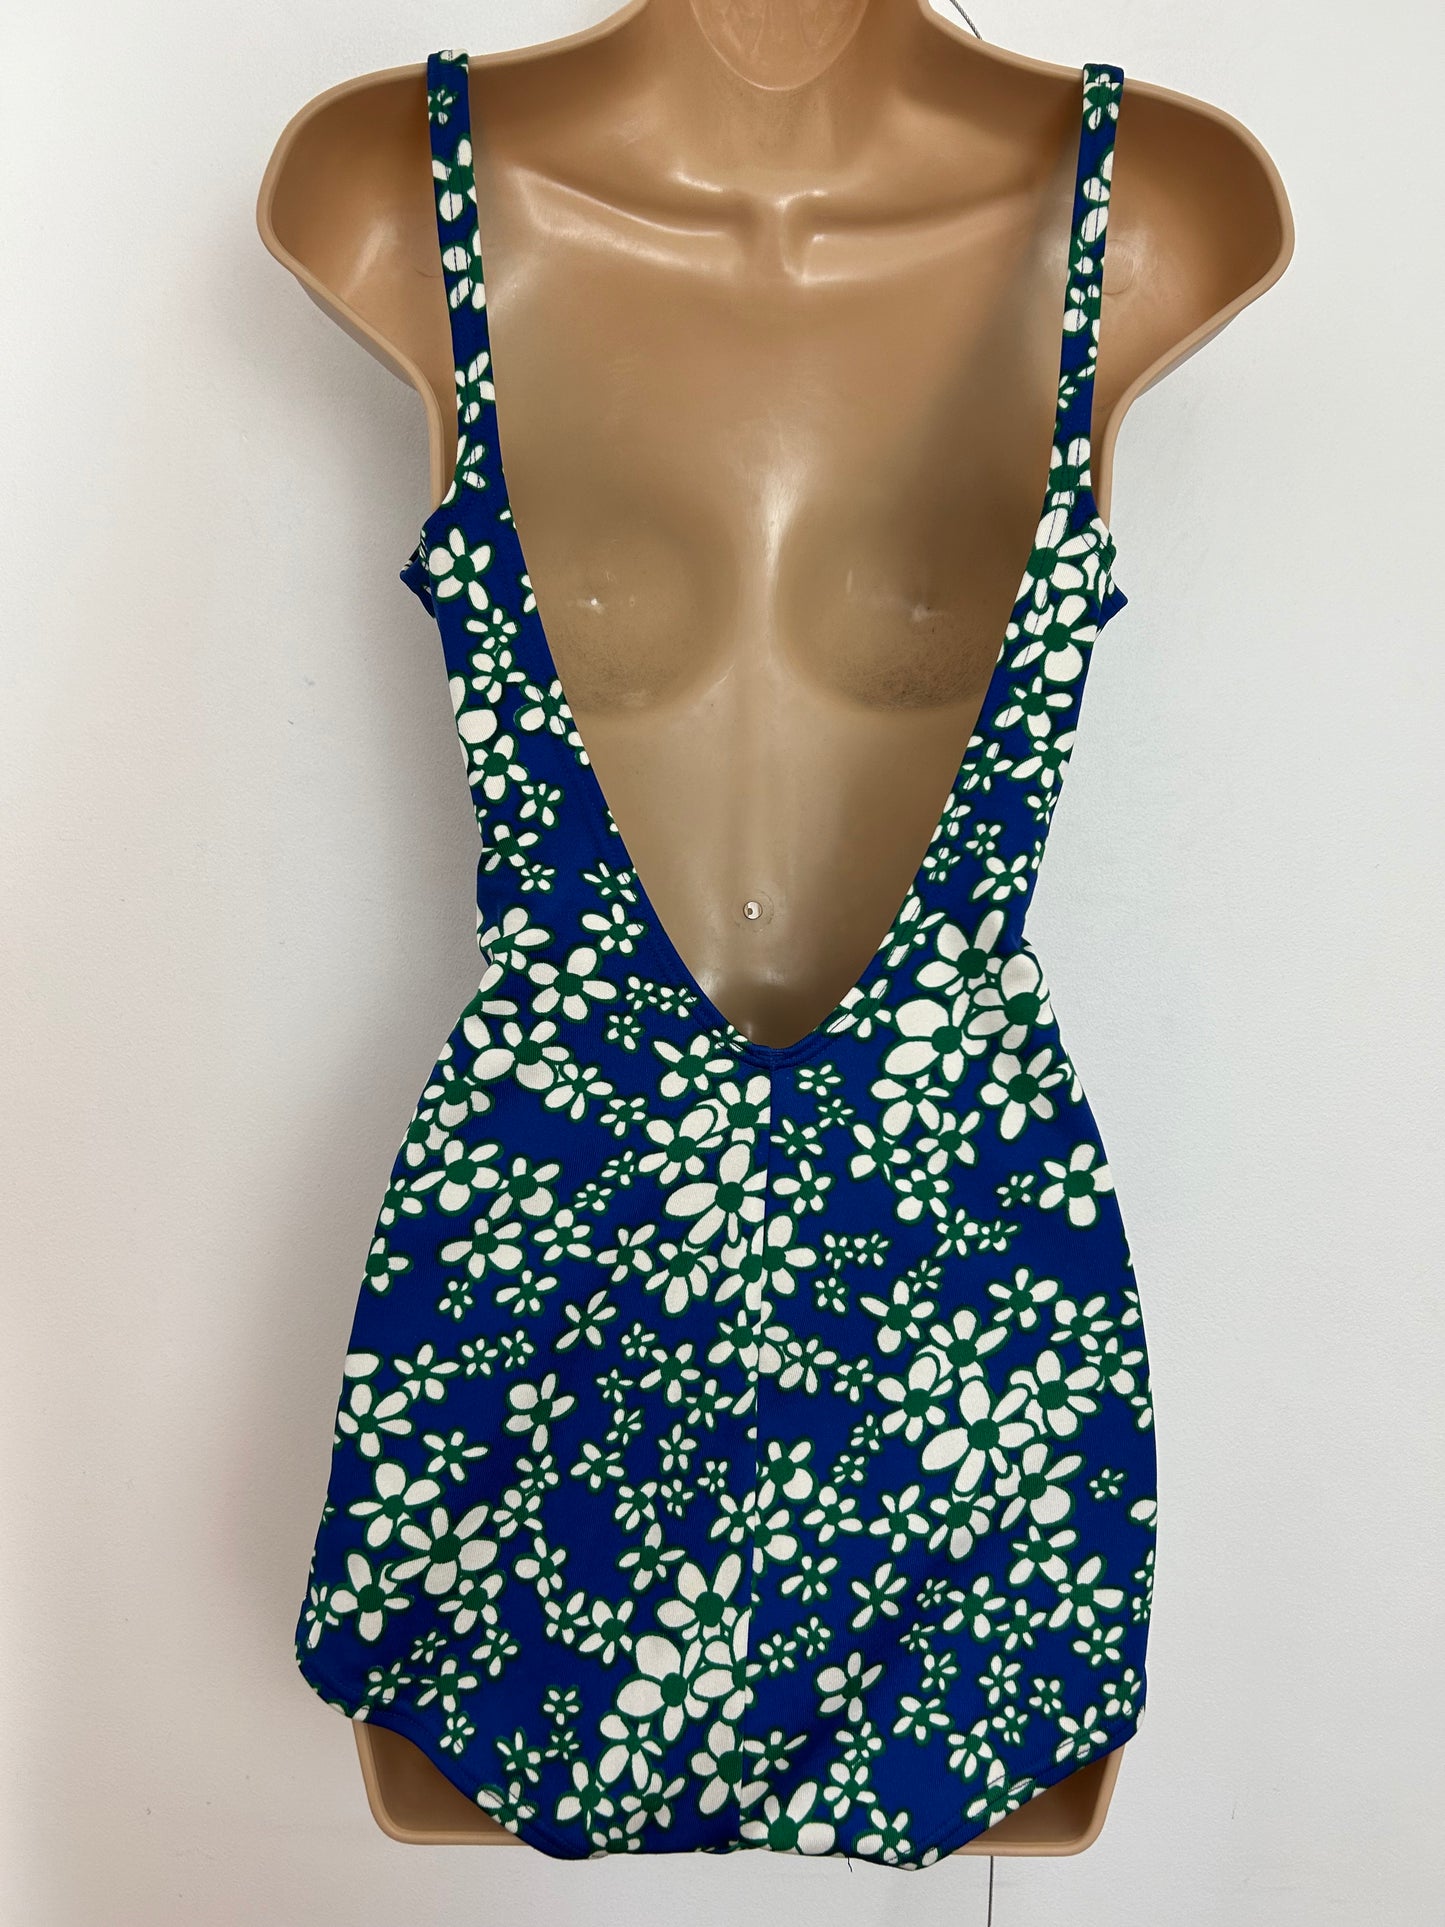 Vintage 1960s BLEYLE Approx UK Size 12 Blue Green & White Floral Print Low Cut Leg Swimsuit Bathing Costume